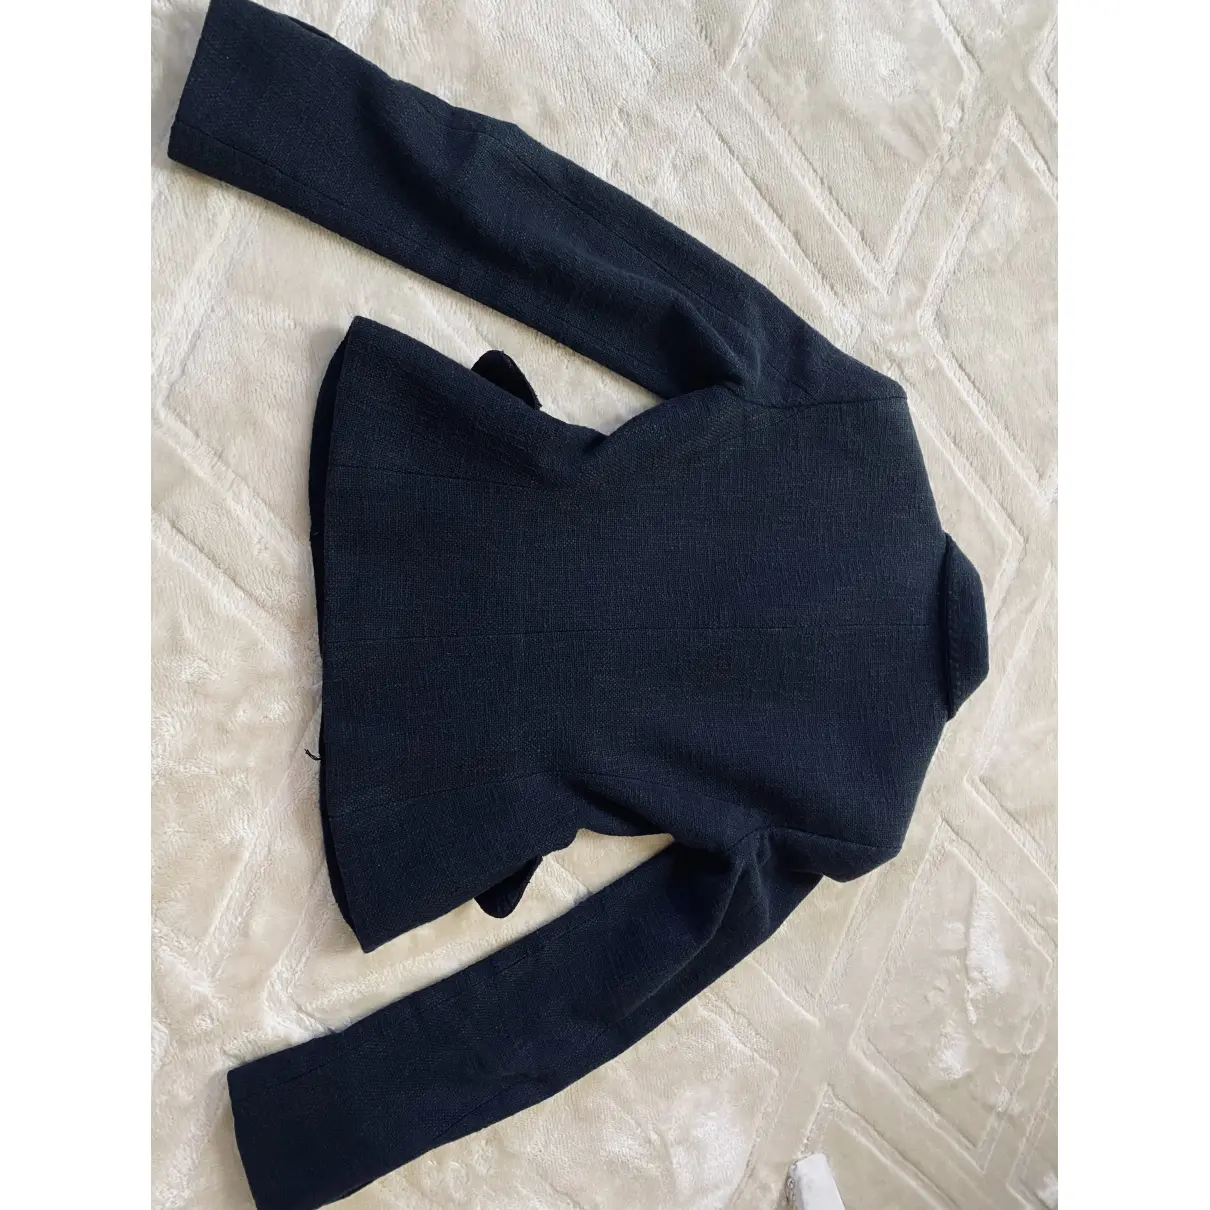 Buy Yves Saint Laurent Wool blazer online